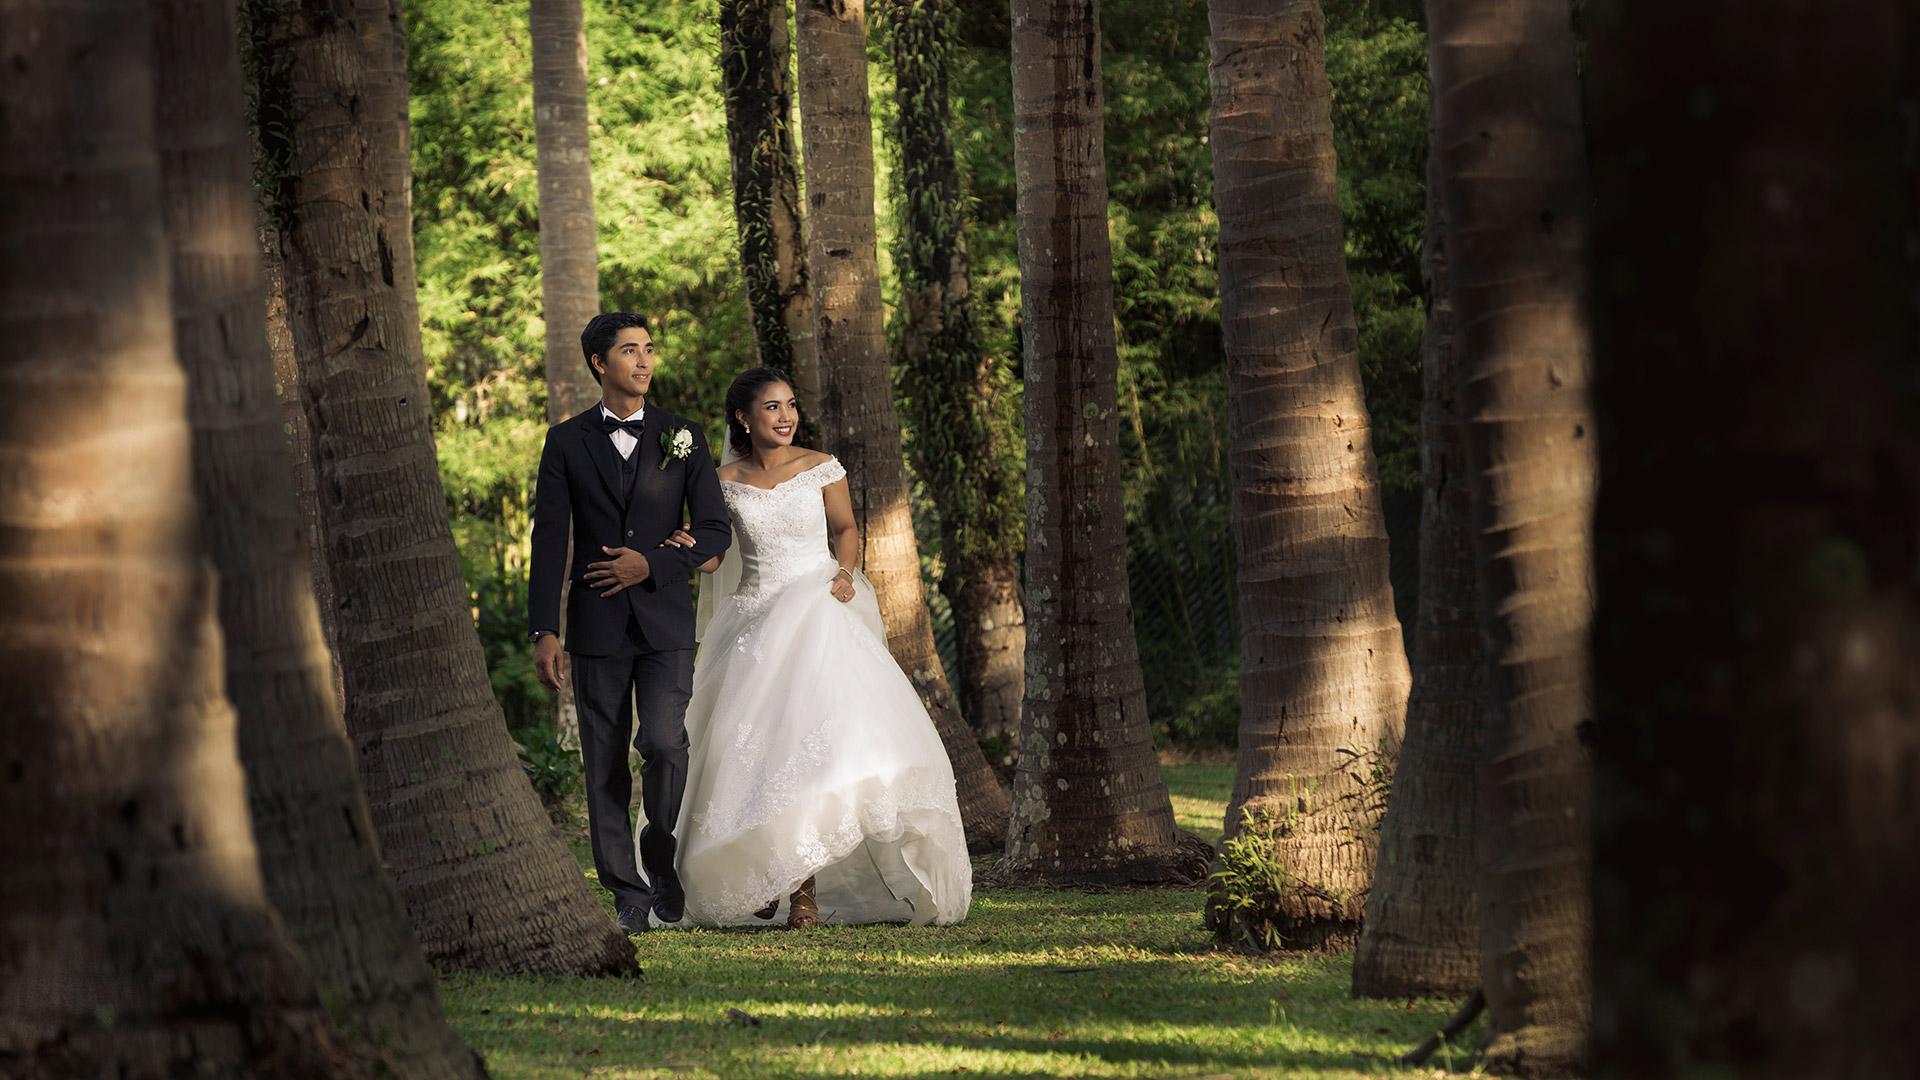 Banyan Tree Thailand Phuket Wedding Packages - Weddings Couple Forest